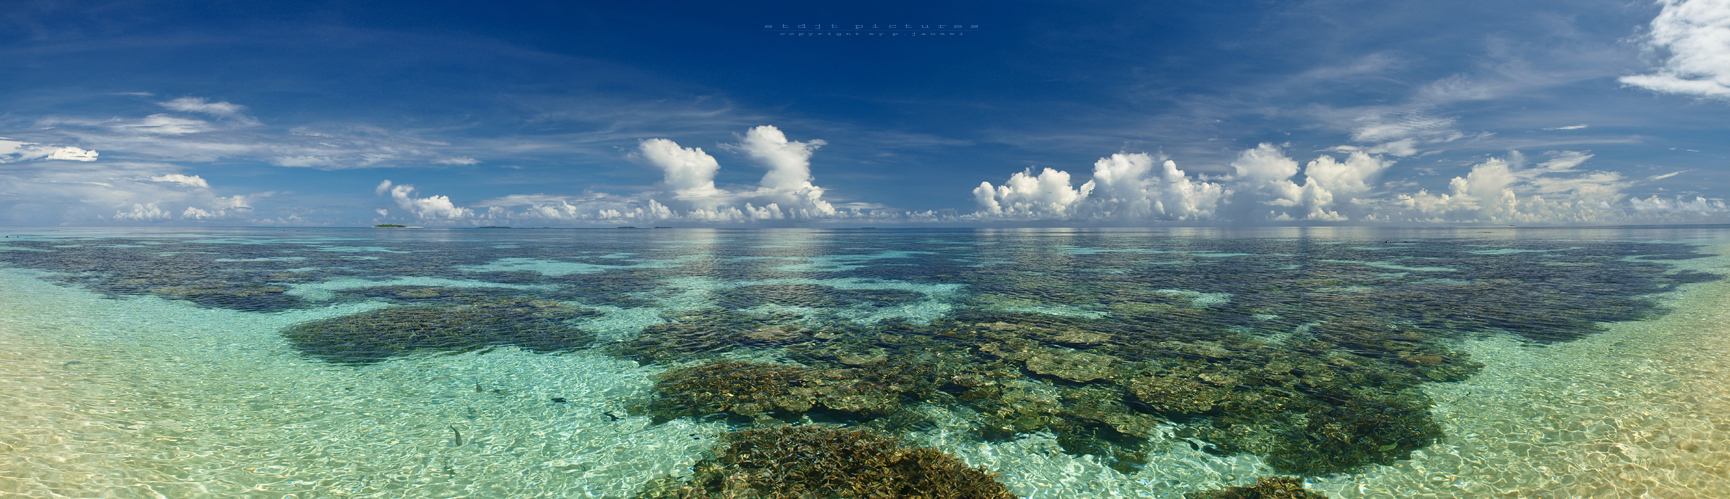 Madoogali Island - North Ari Atoll - Maldives 2012